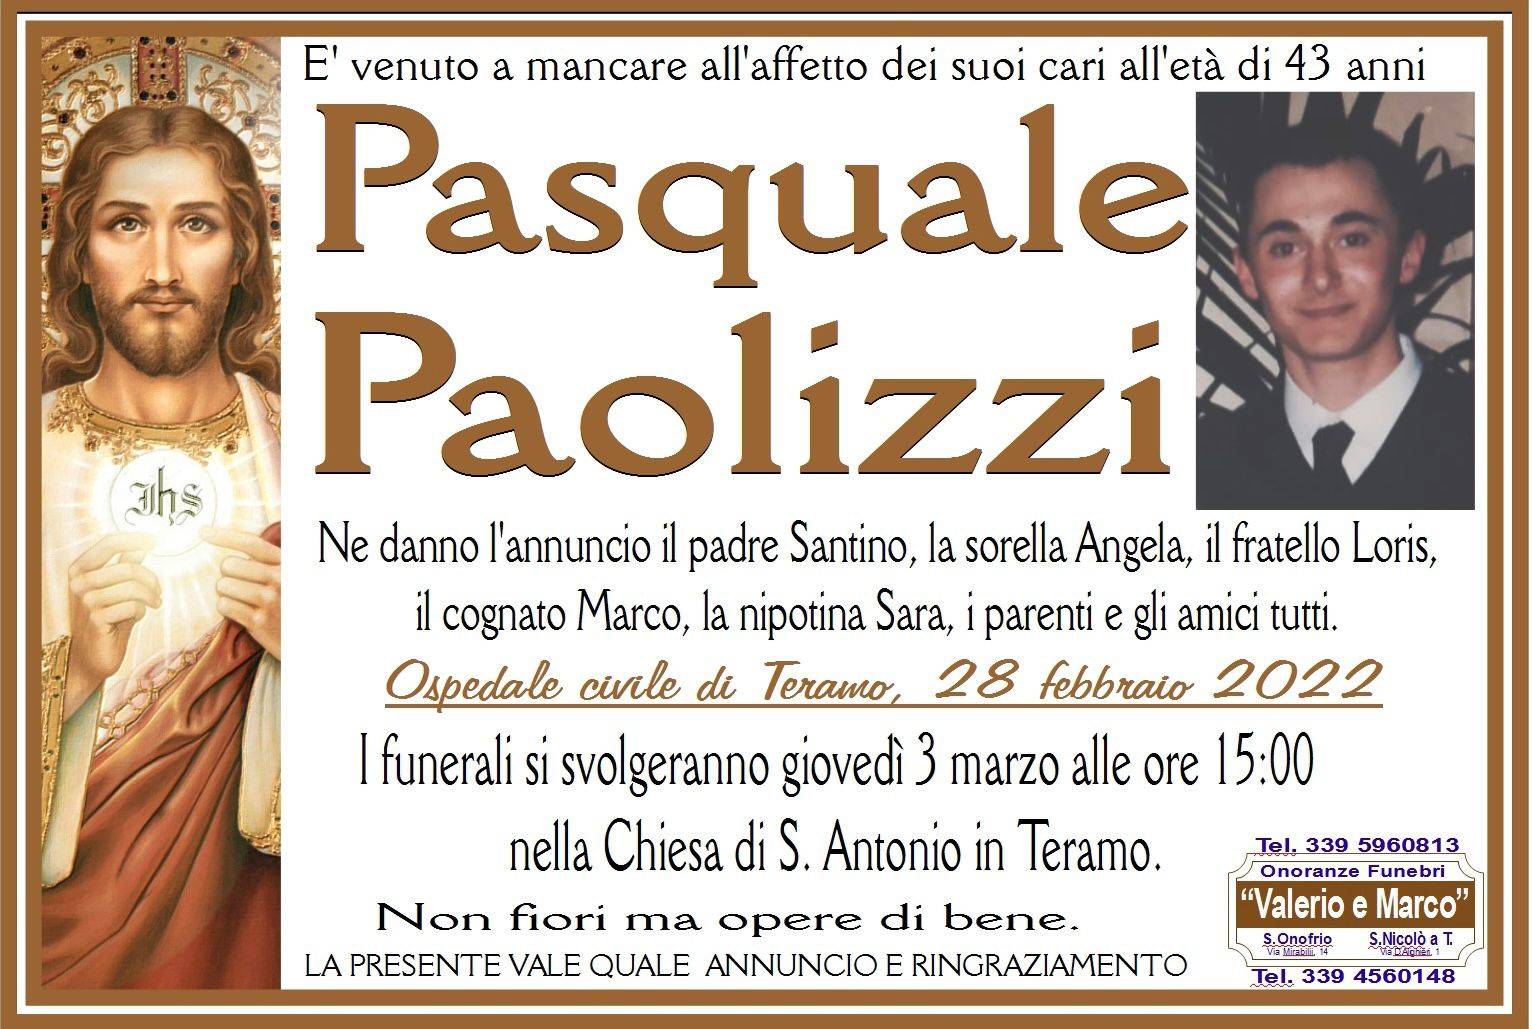 Pasquale Paolizzi